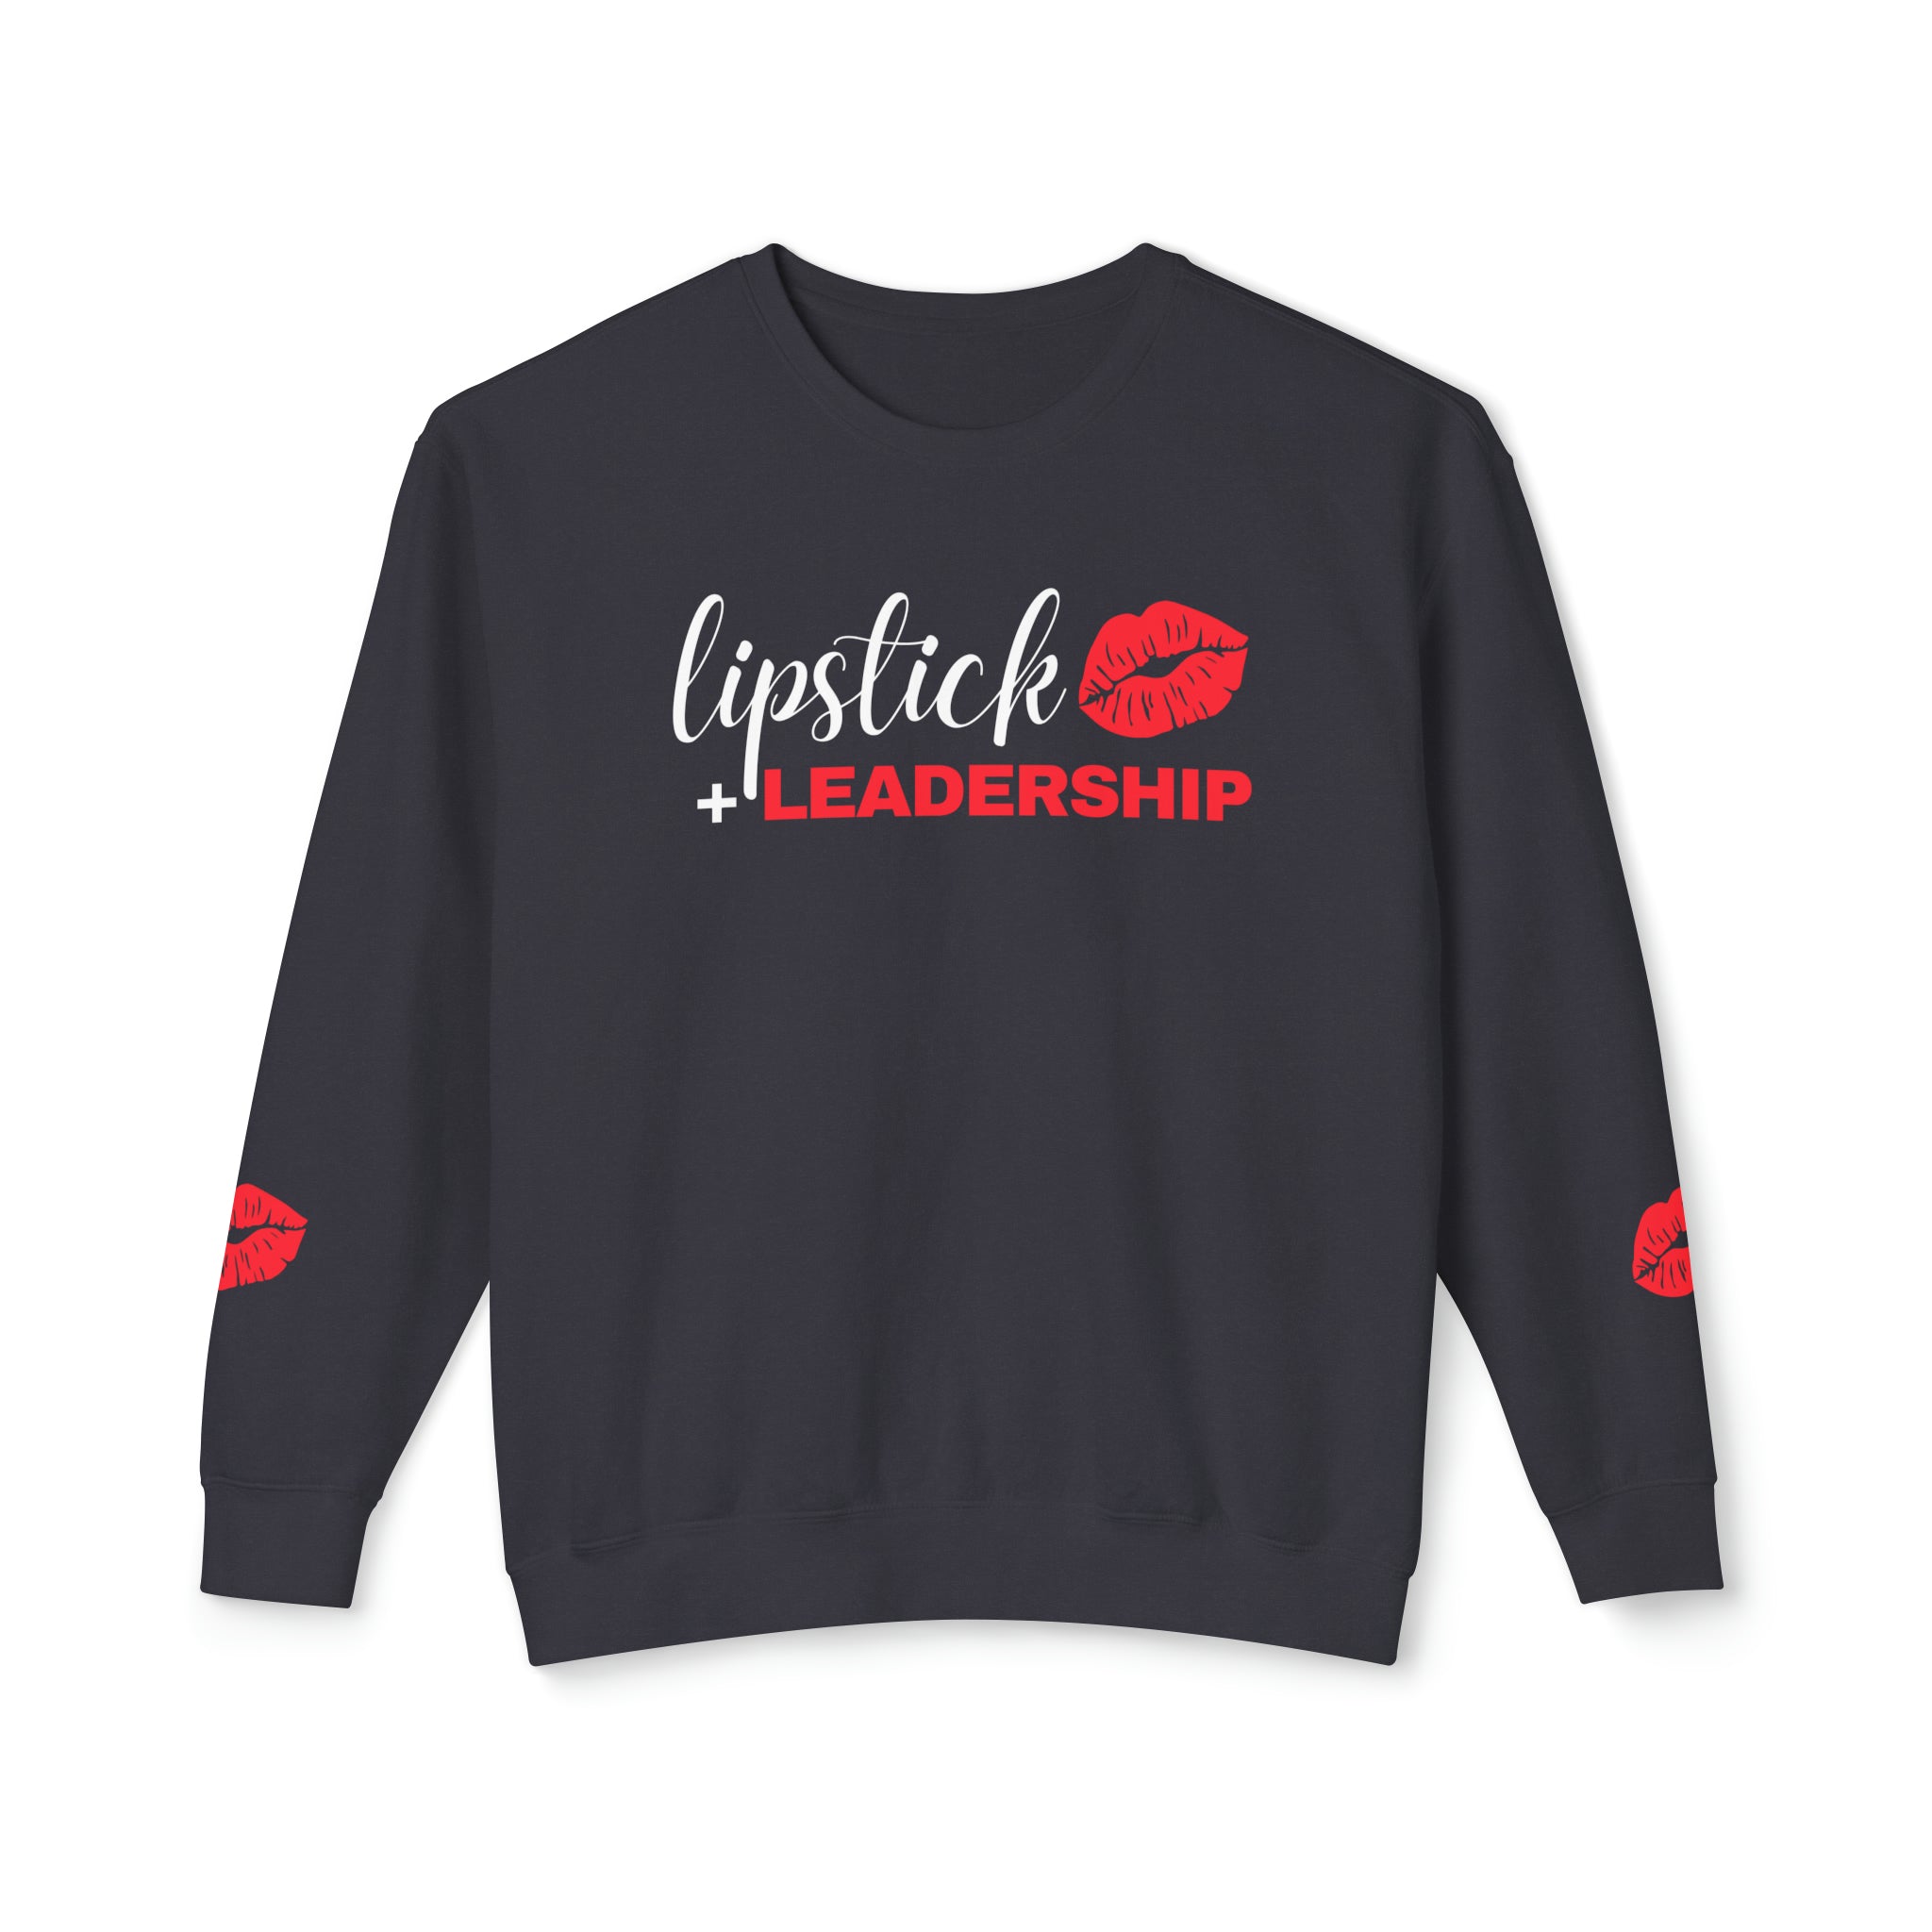 Lipstick + Leadership (Red Lips) Relaxed Fit Lightweight Crewneck Sweatshirt, Makeup Sweatshirt, Beauty Business Sweatshirt Sweatshirt Black-3XL The Middle Aged Groove